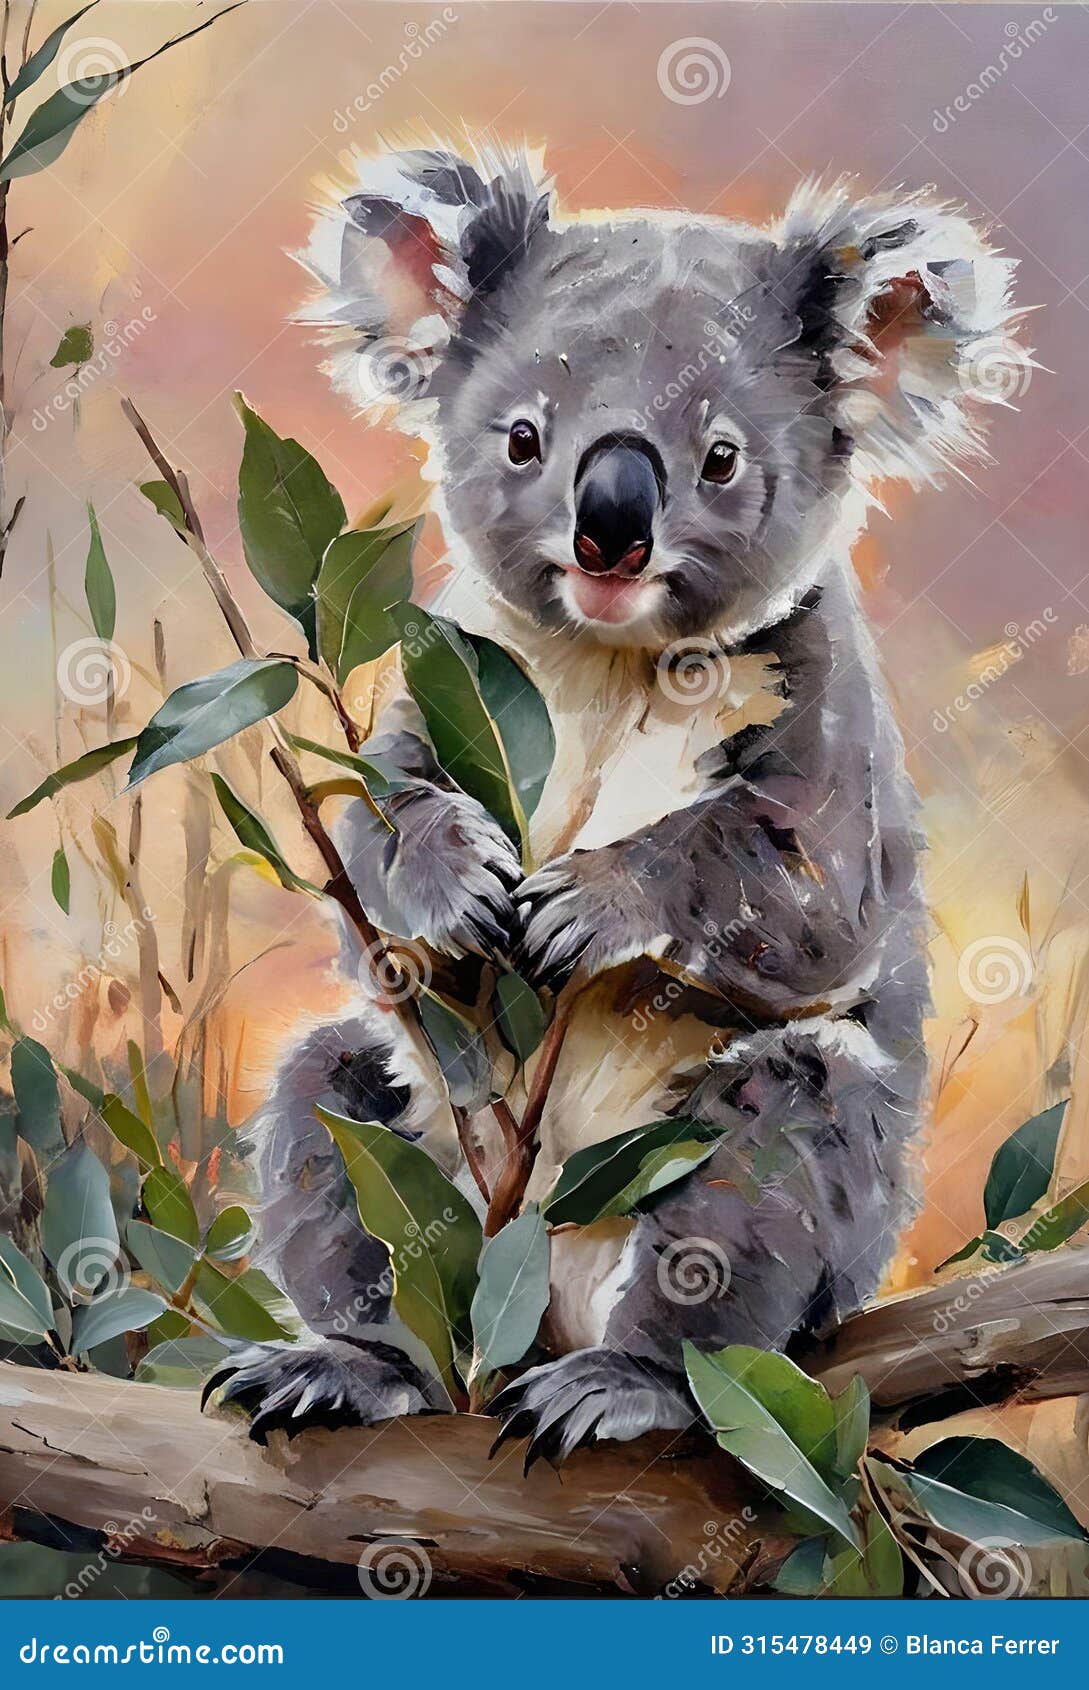 a koala marsupial sitting on a tree branch